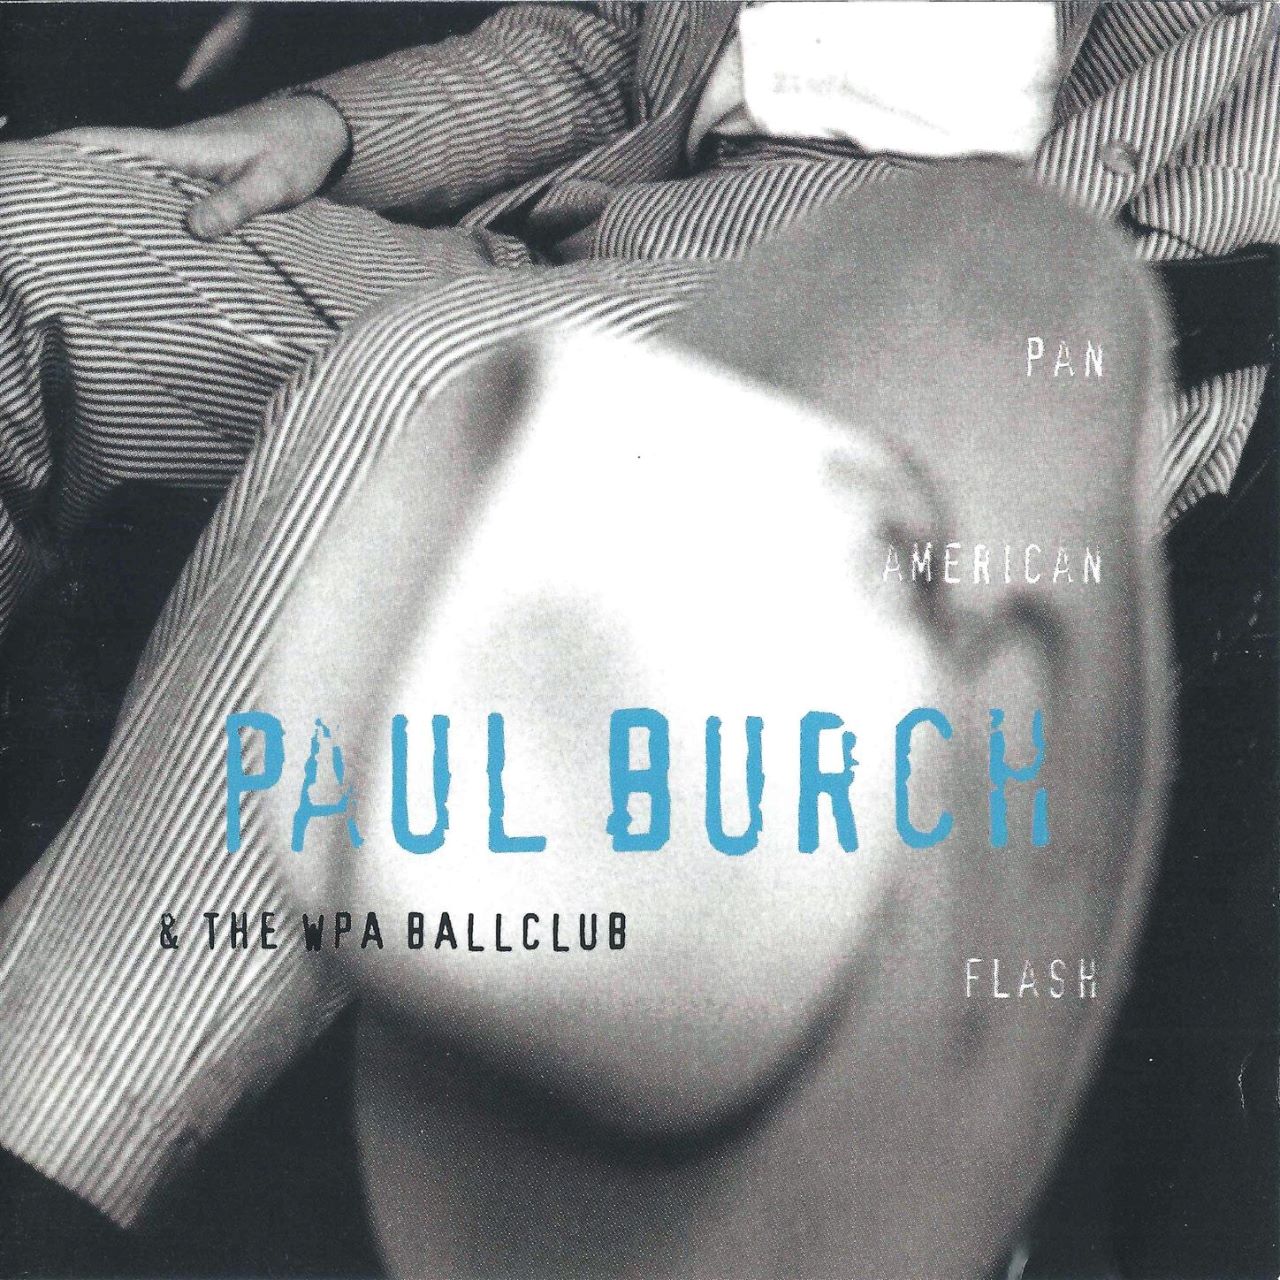 Paul Burch & The WPA Ballclub - Pan American Flash cover album